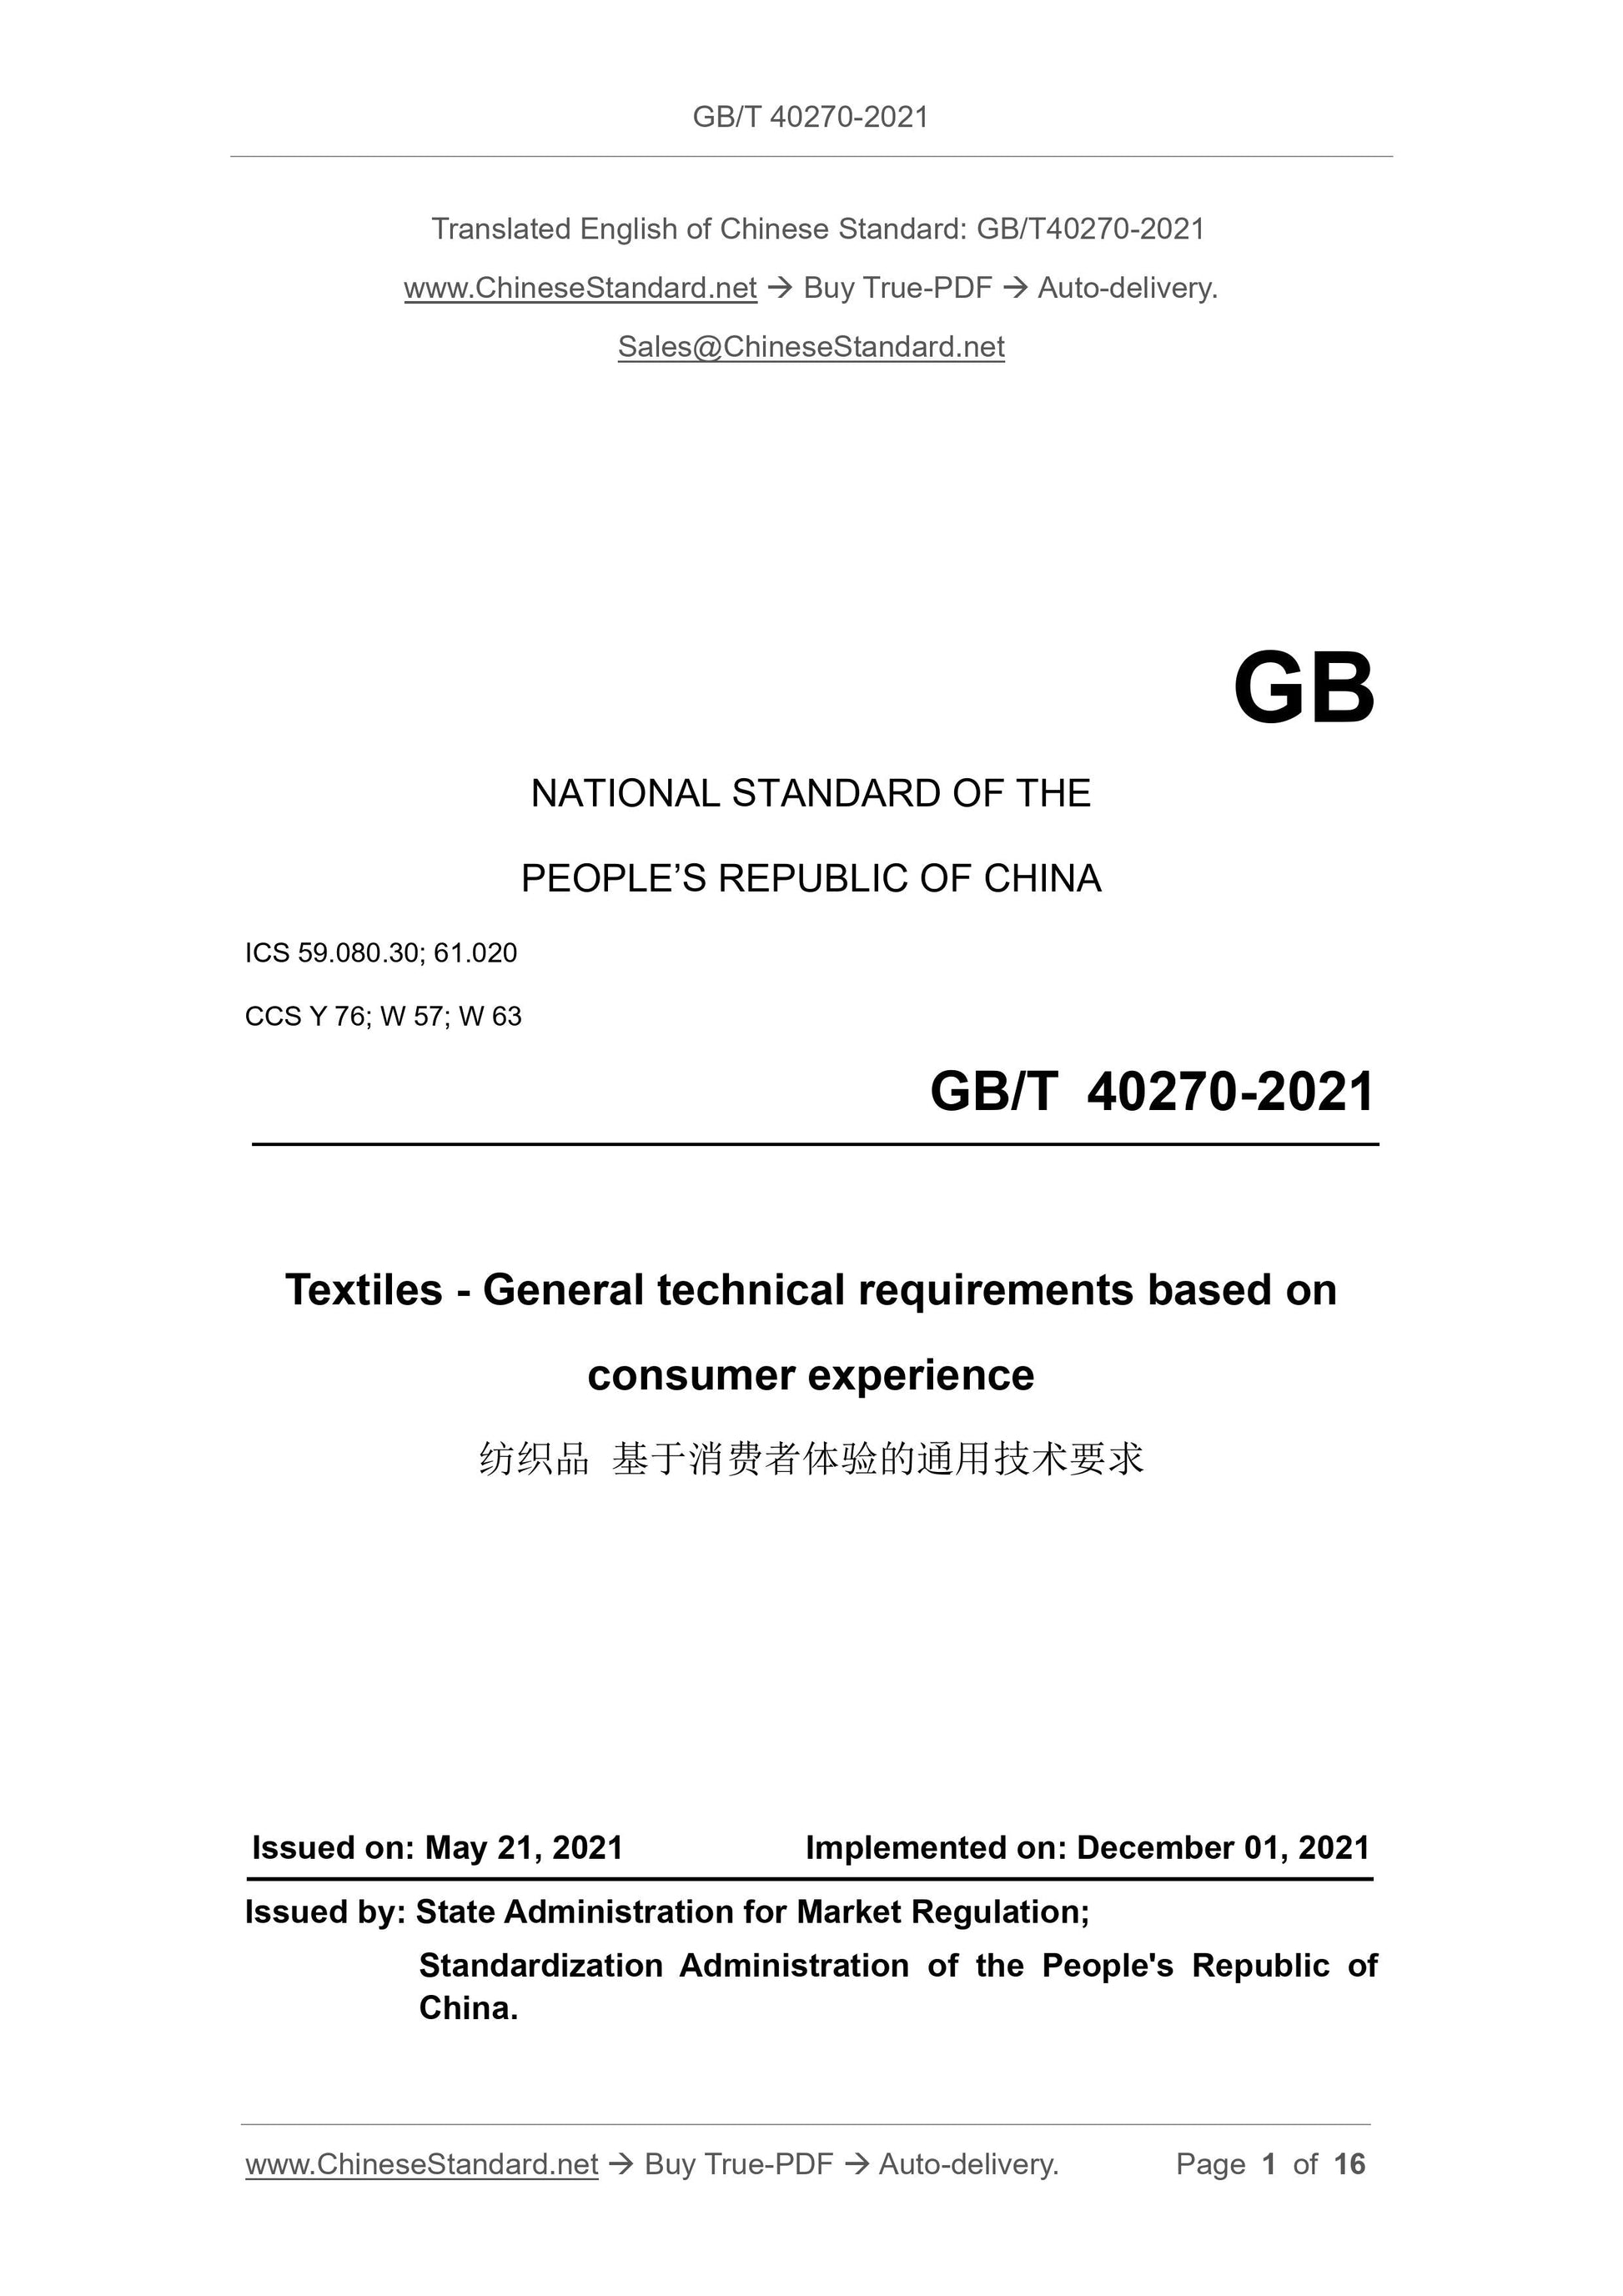 GBT40270-2021 Page 1